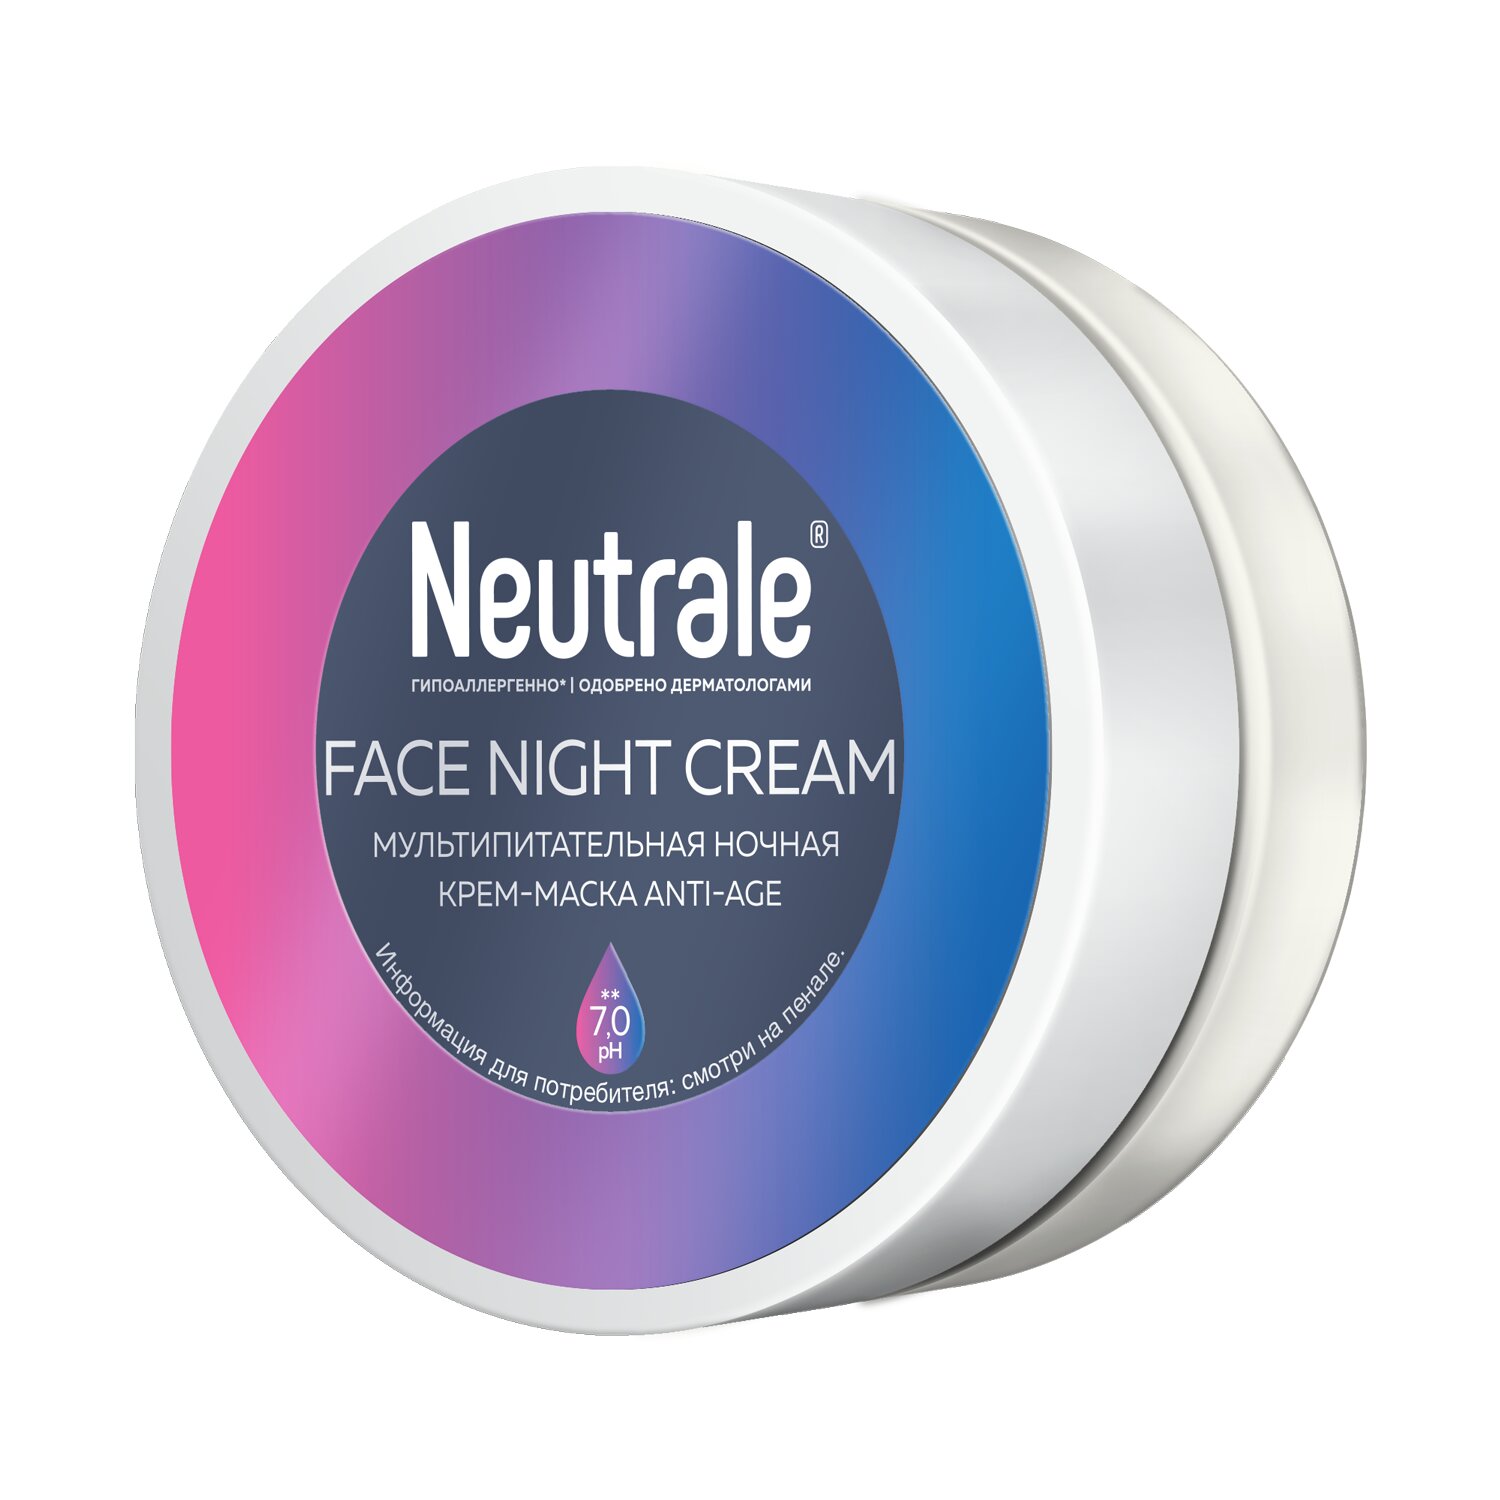 Neutrale Мультипитательная ночная несмываемая крем-маска для лица Anti-Age, 50 мл (Neutrale, Для кожи лица, шеи, зоны декольте и рук)